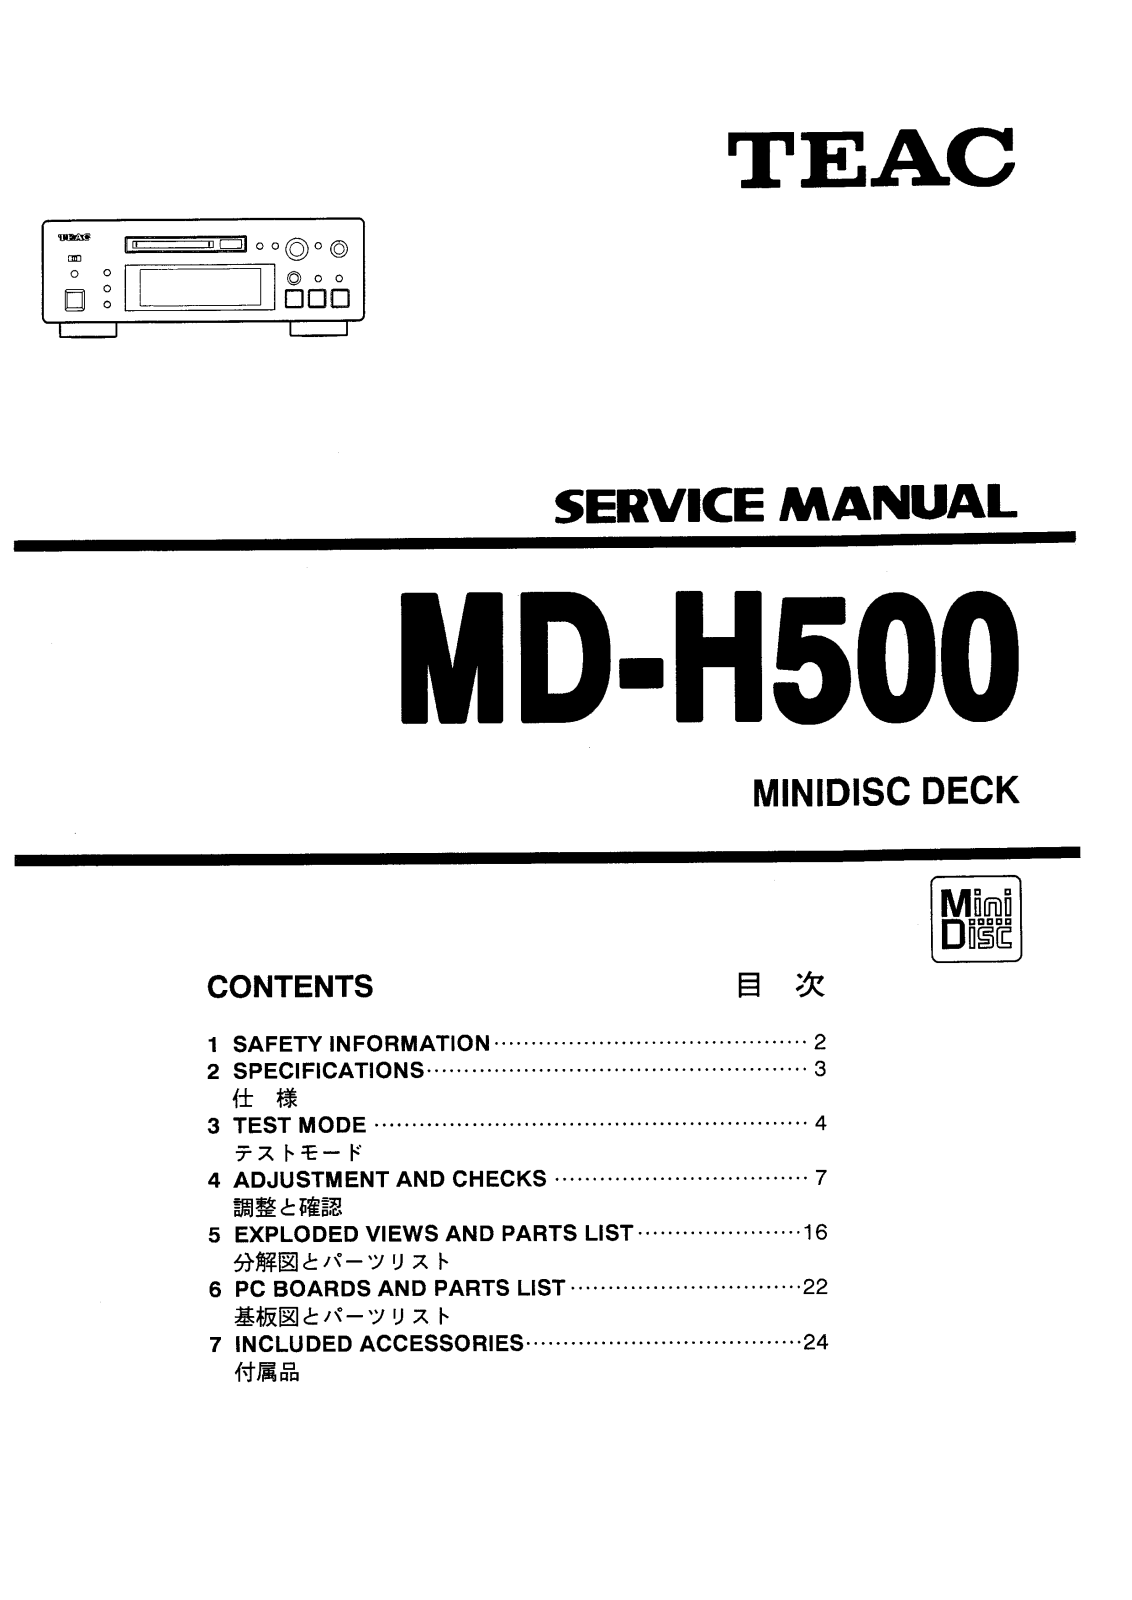 Teac MD-H500 Service Manual